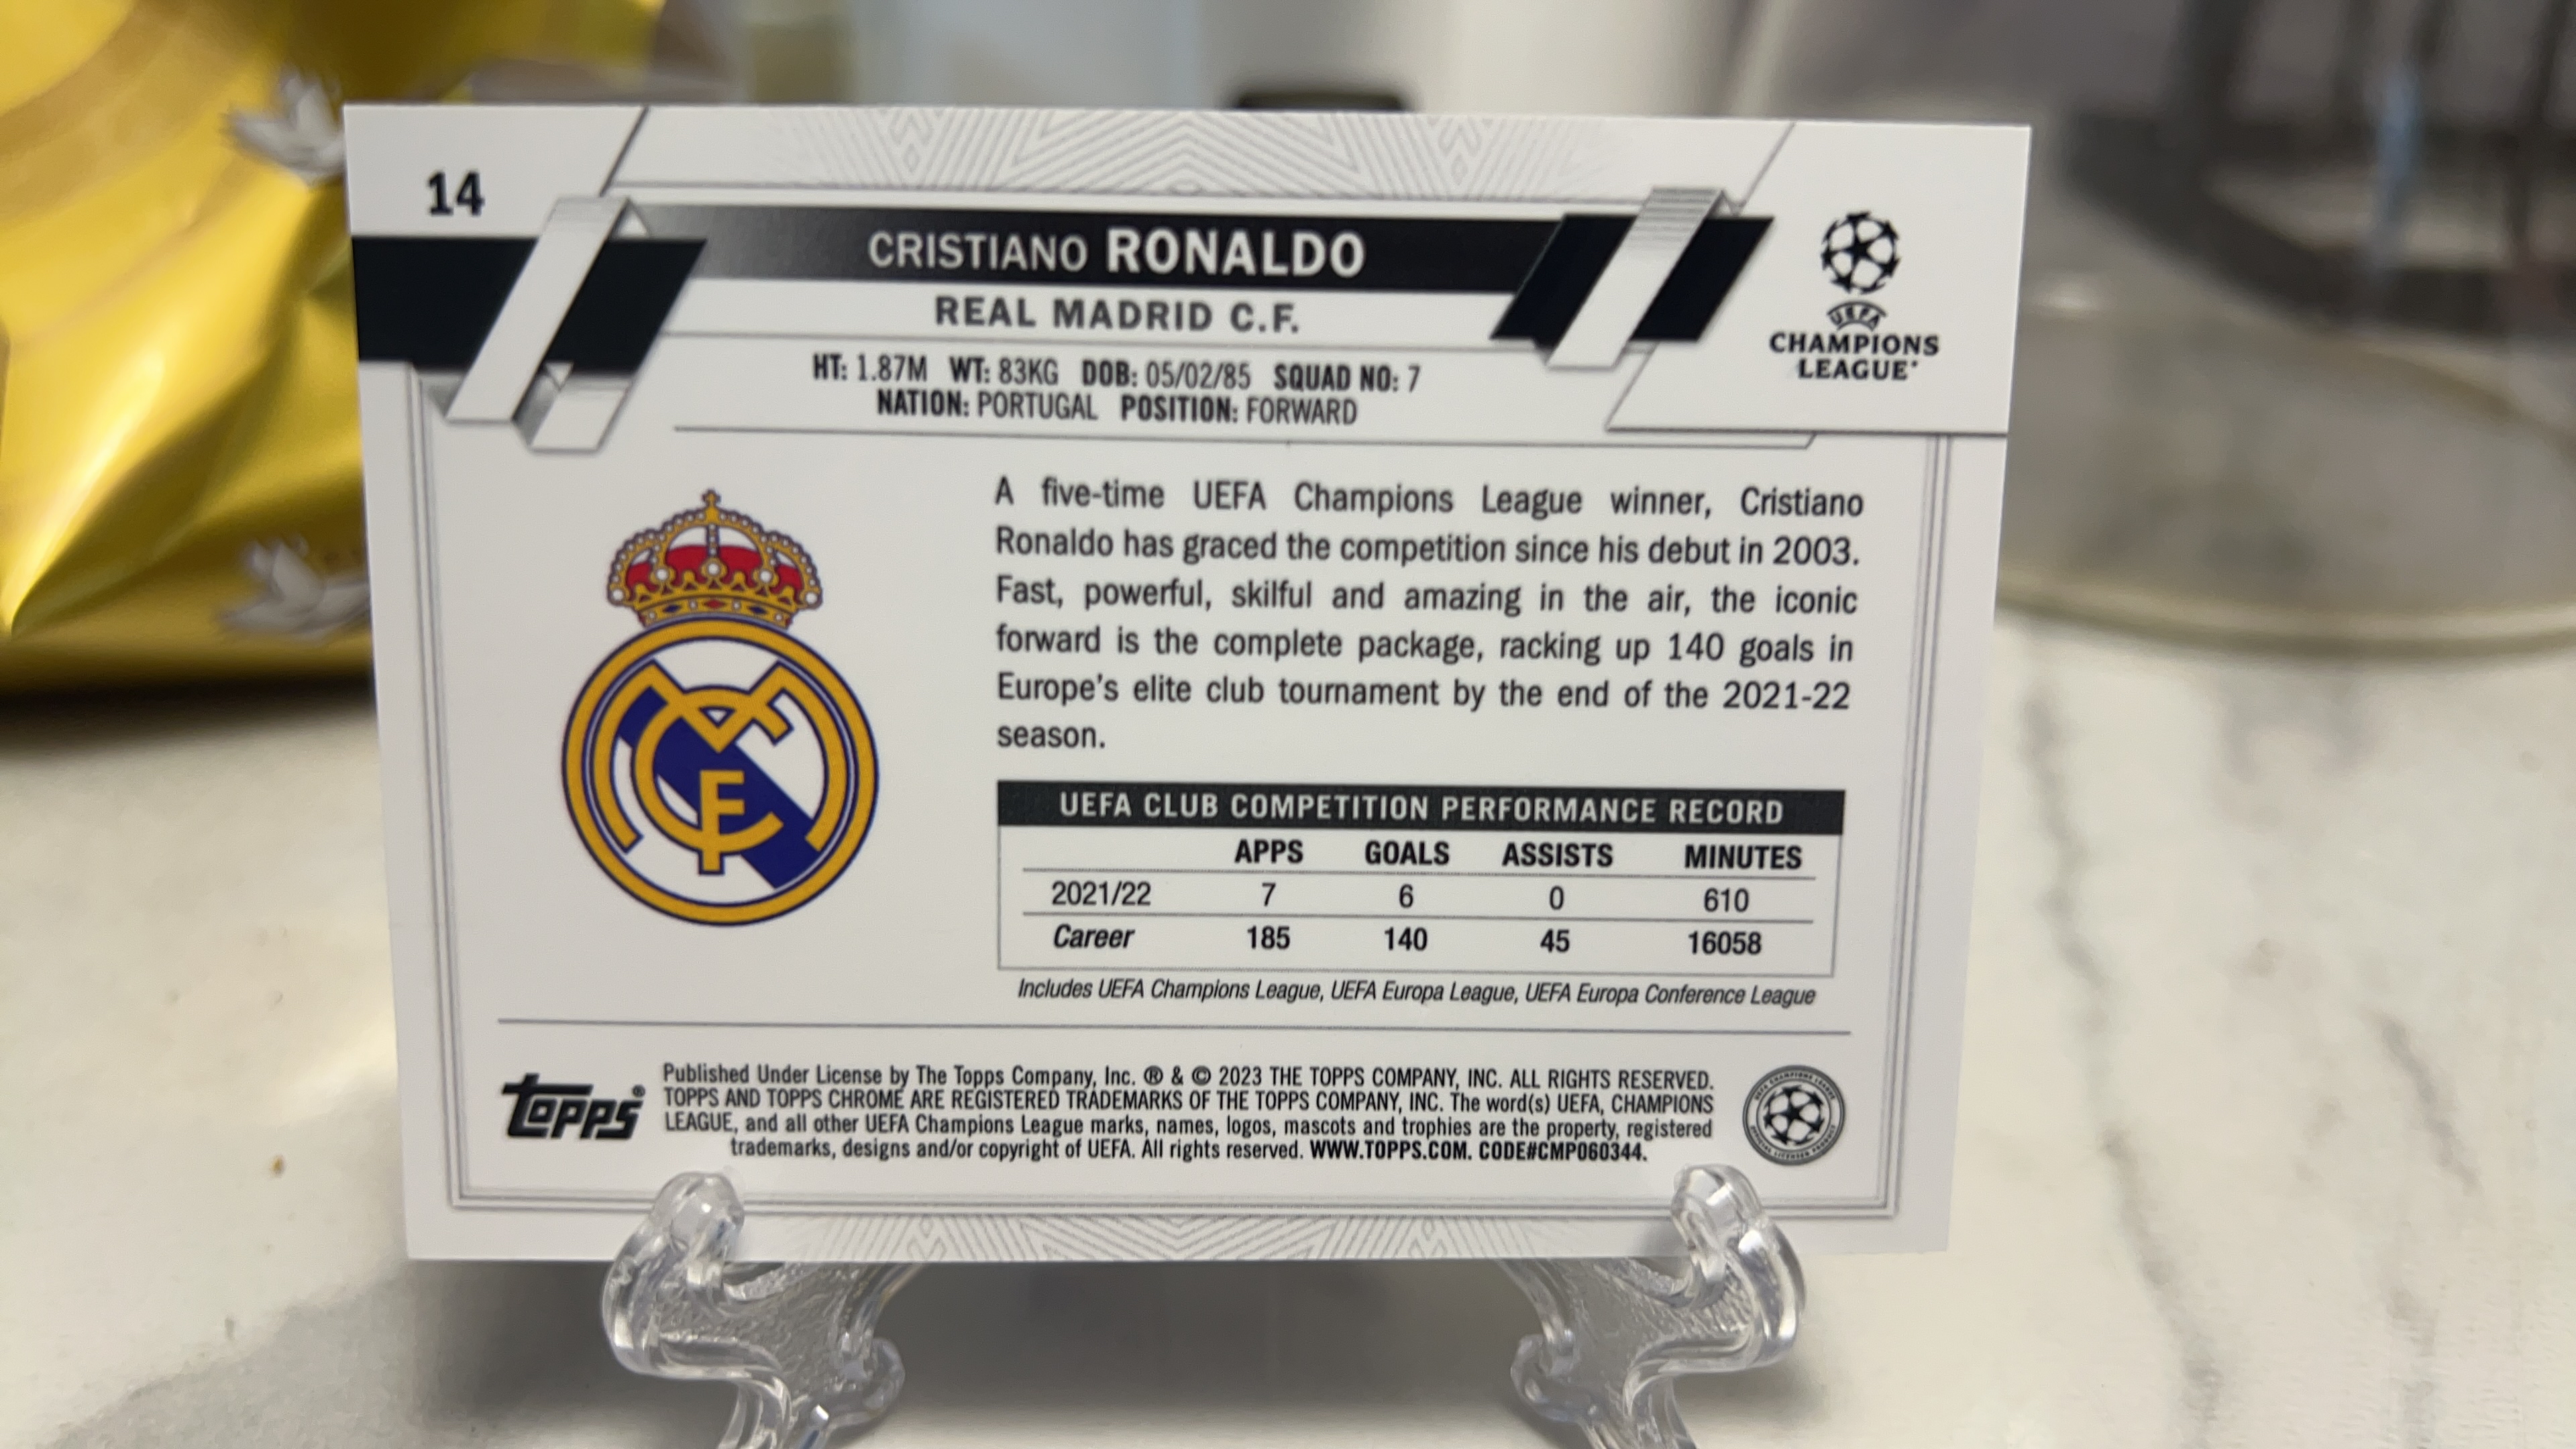 2023 Topps Chrome Cristiano Ronaldo 葡萄牙 皇家马德里 总裁 C罗 2023蓝宝石 SP插入 变化版 卡品如图 凑套收藏必备